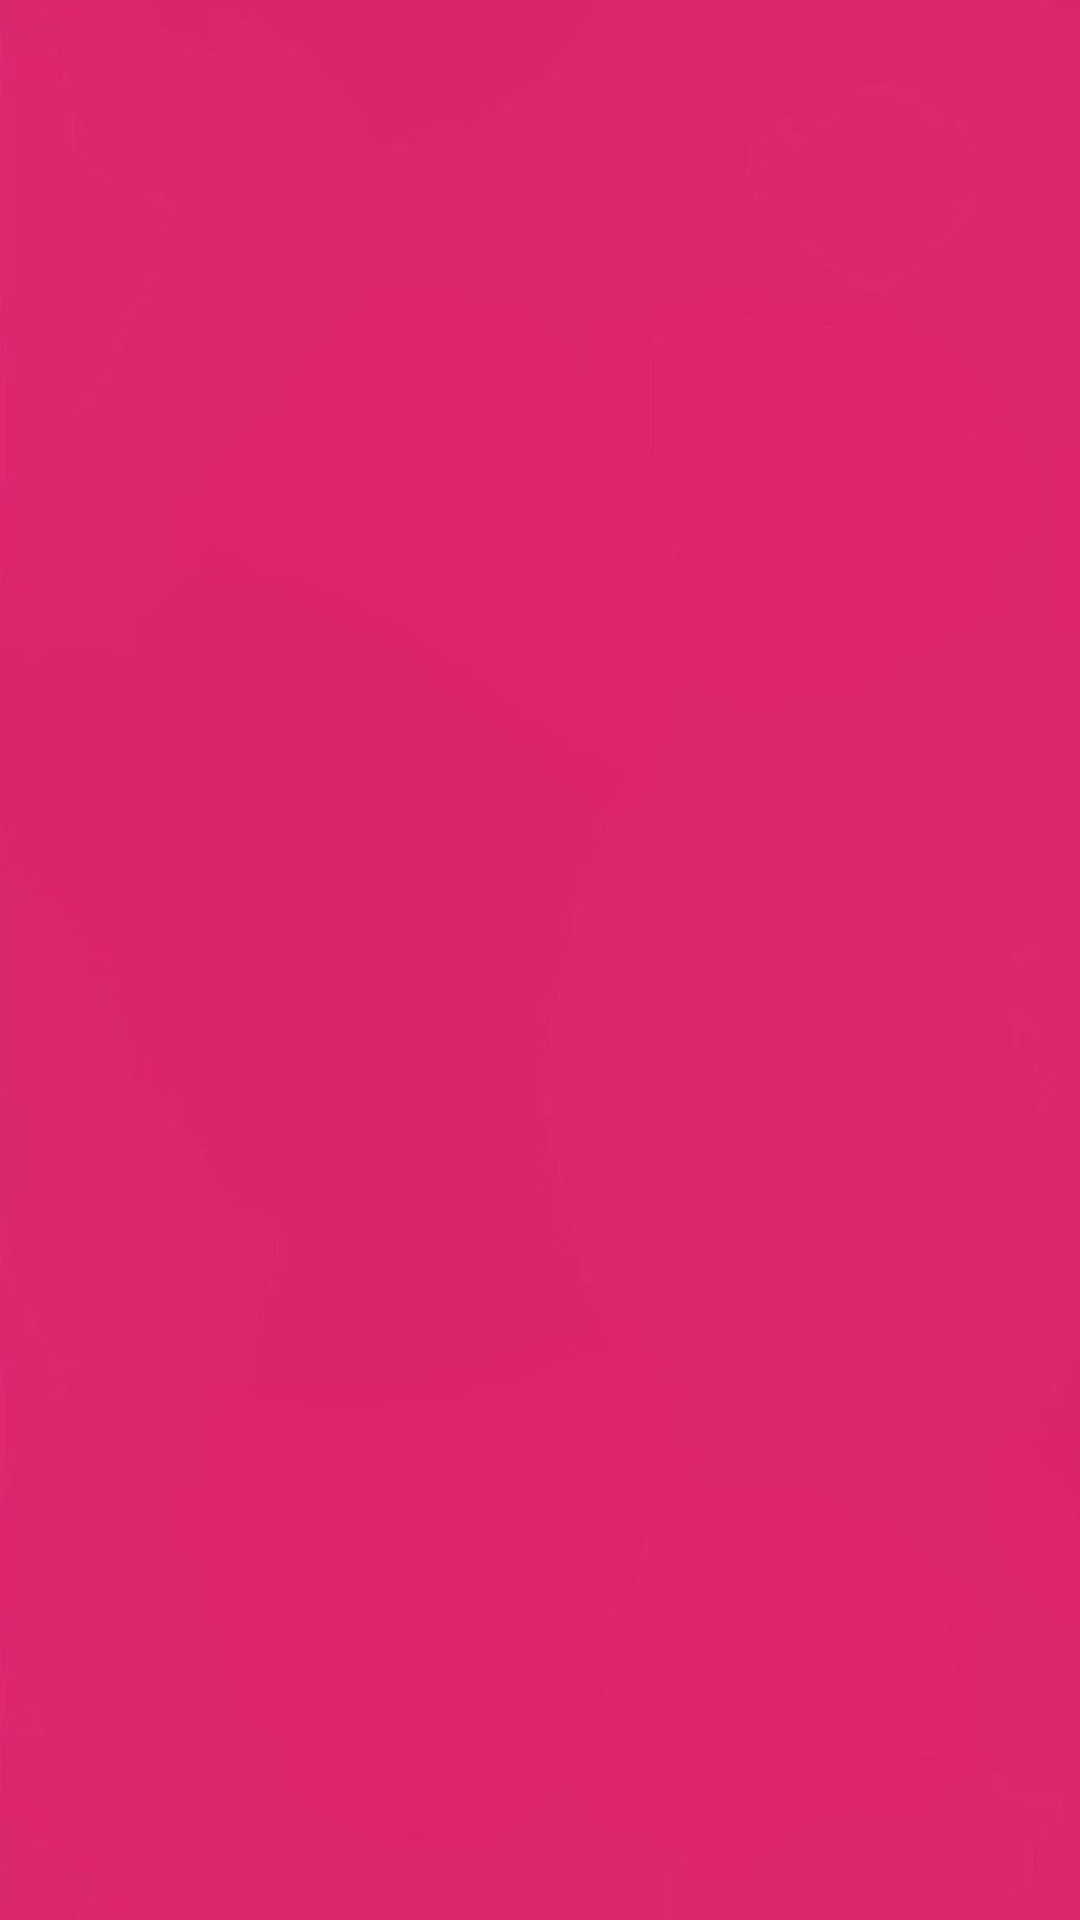 1080x1920 Simple-pink-background-iPhone-7-Wallpaper.jpg